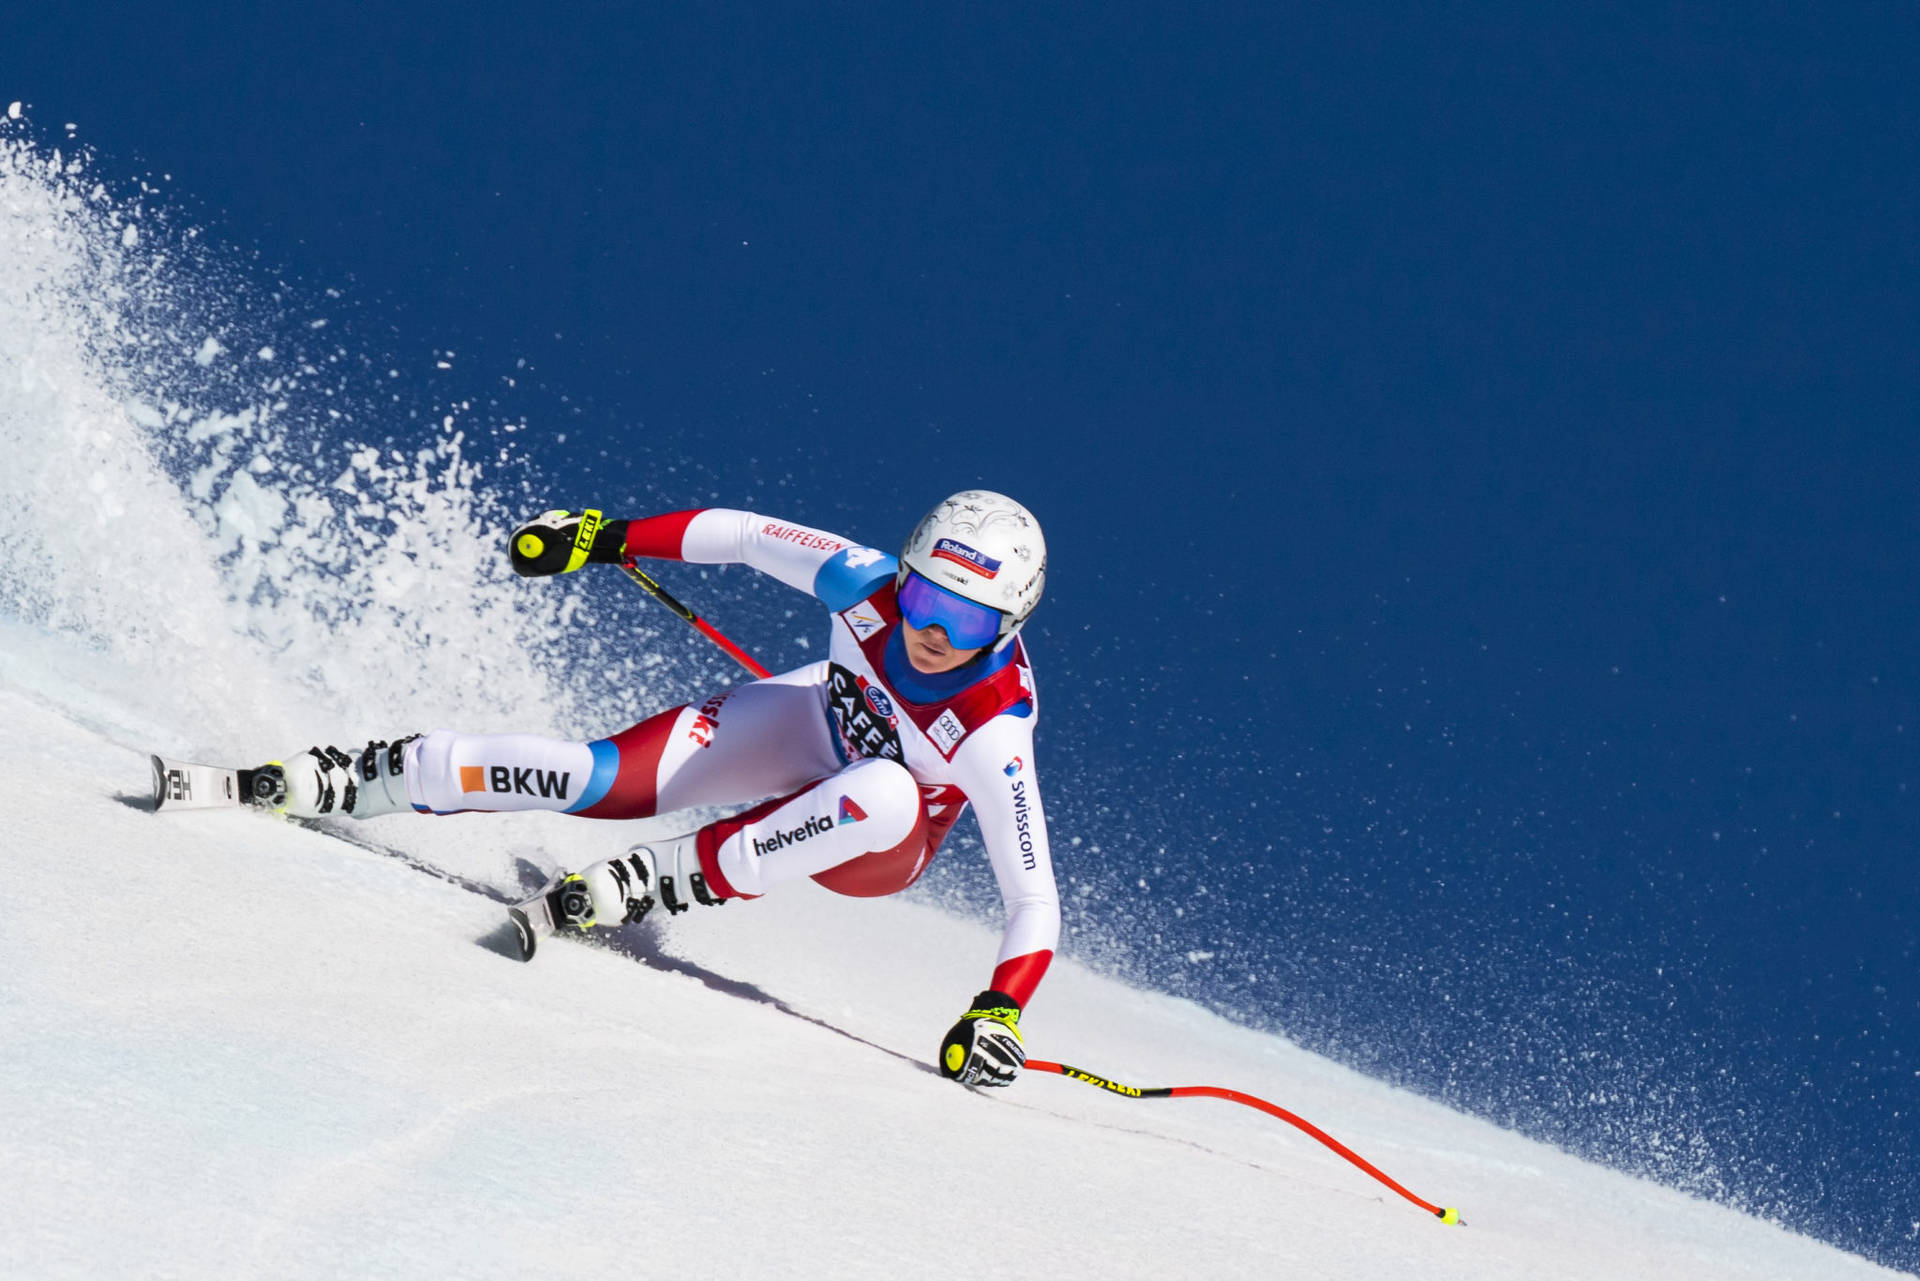 Alpine Skiing Champion, Lara Gut-Behrami in action Wallpaper